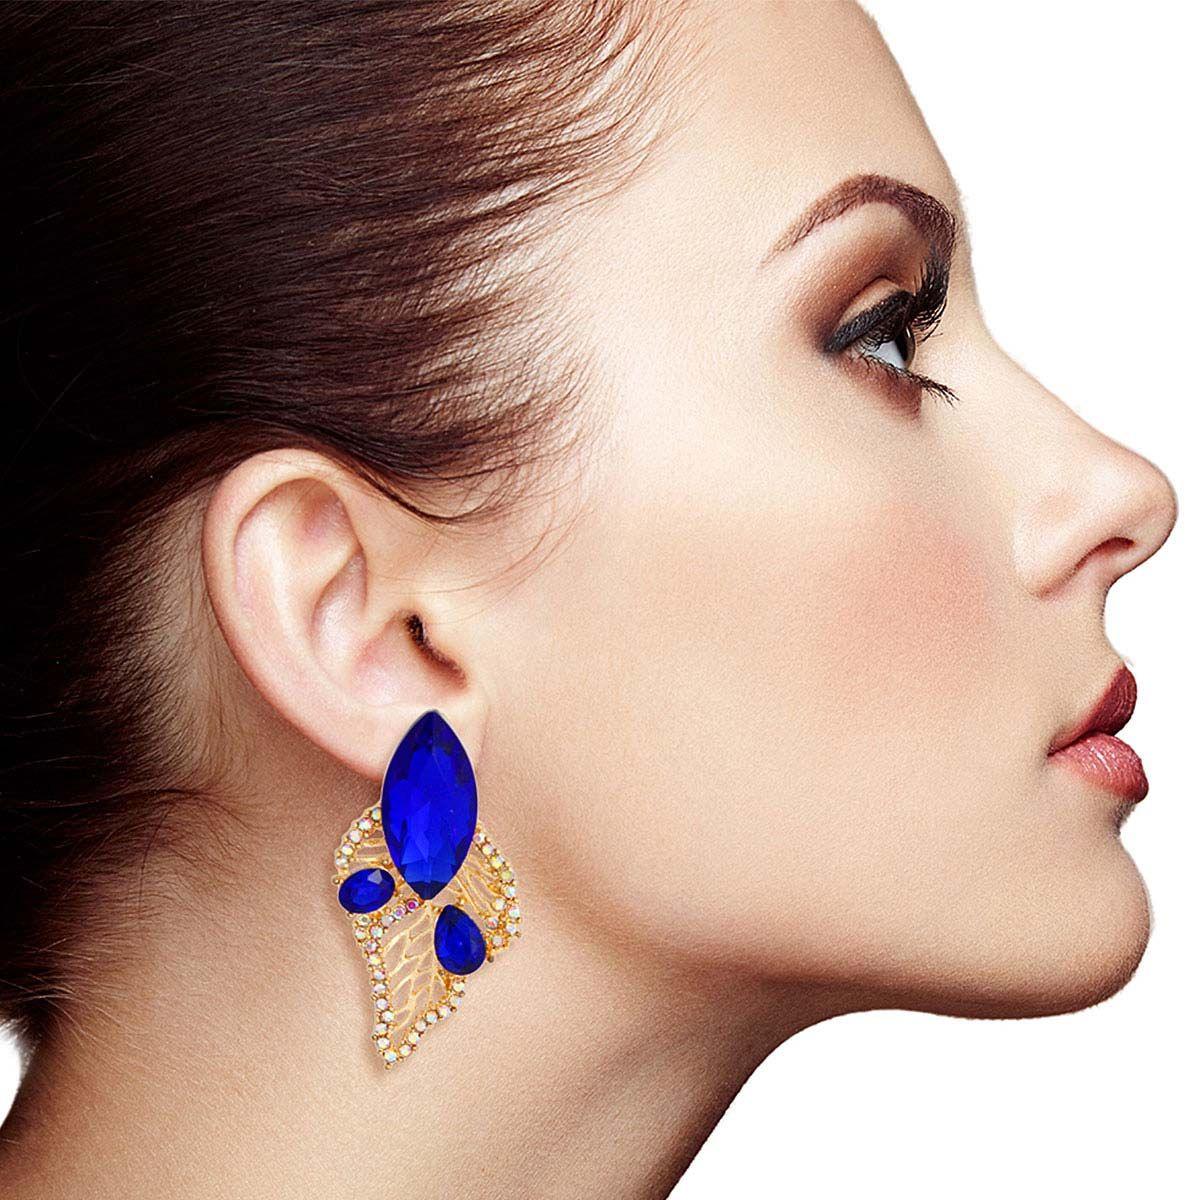 Shop Now: Trendy Royal Blue Gold Leaf Stud Earrings